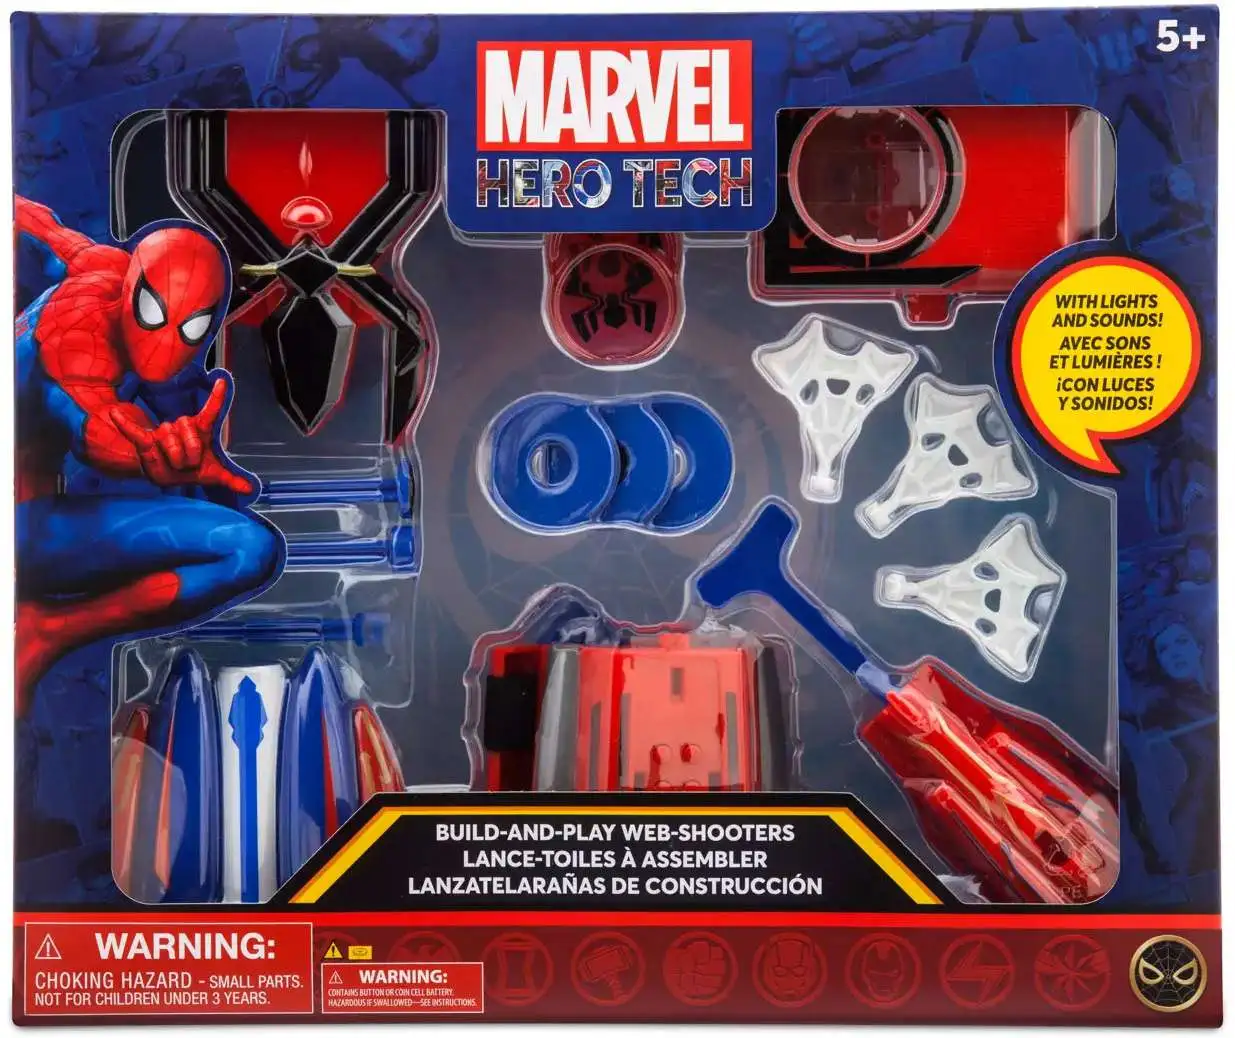 Spider-Man Marvel Spiderbolt NERF Powered Blaster Toy, Fires Darts,  Includes 3 D